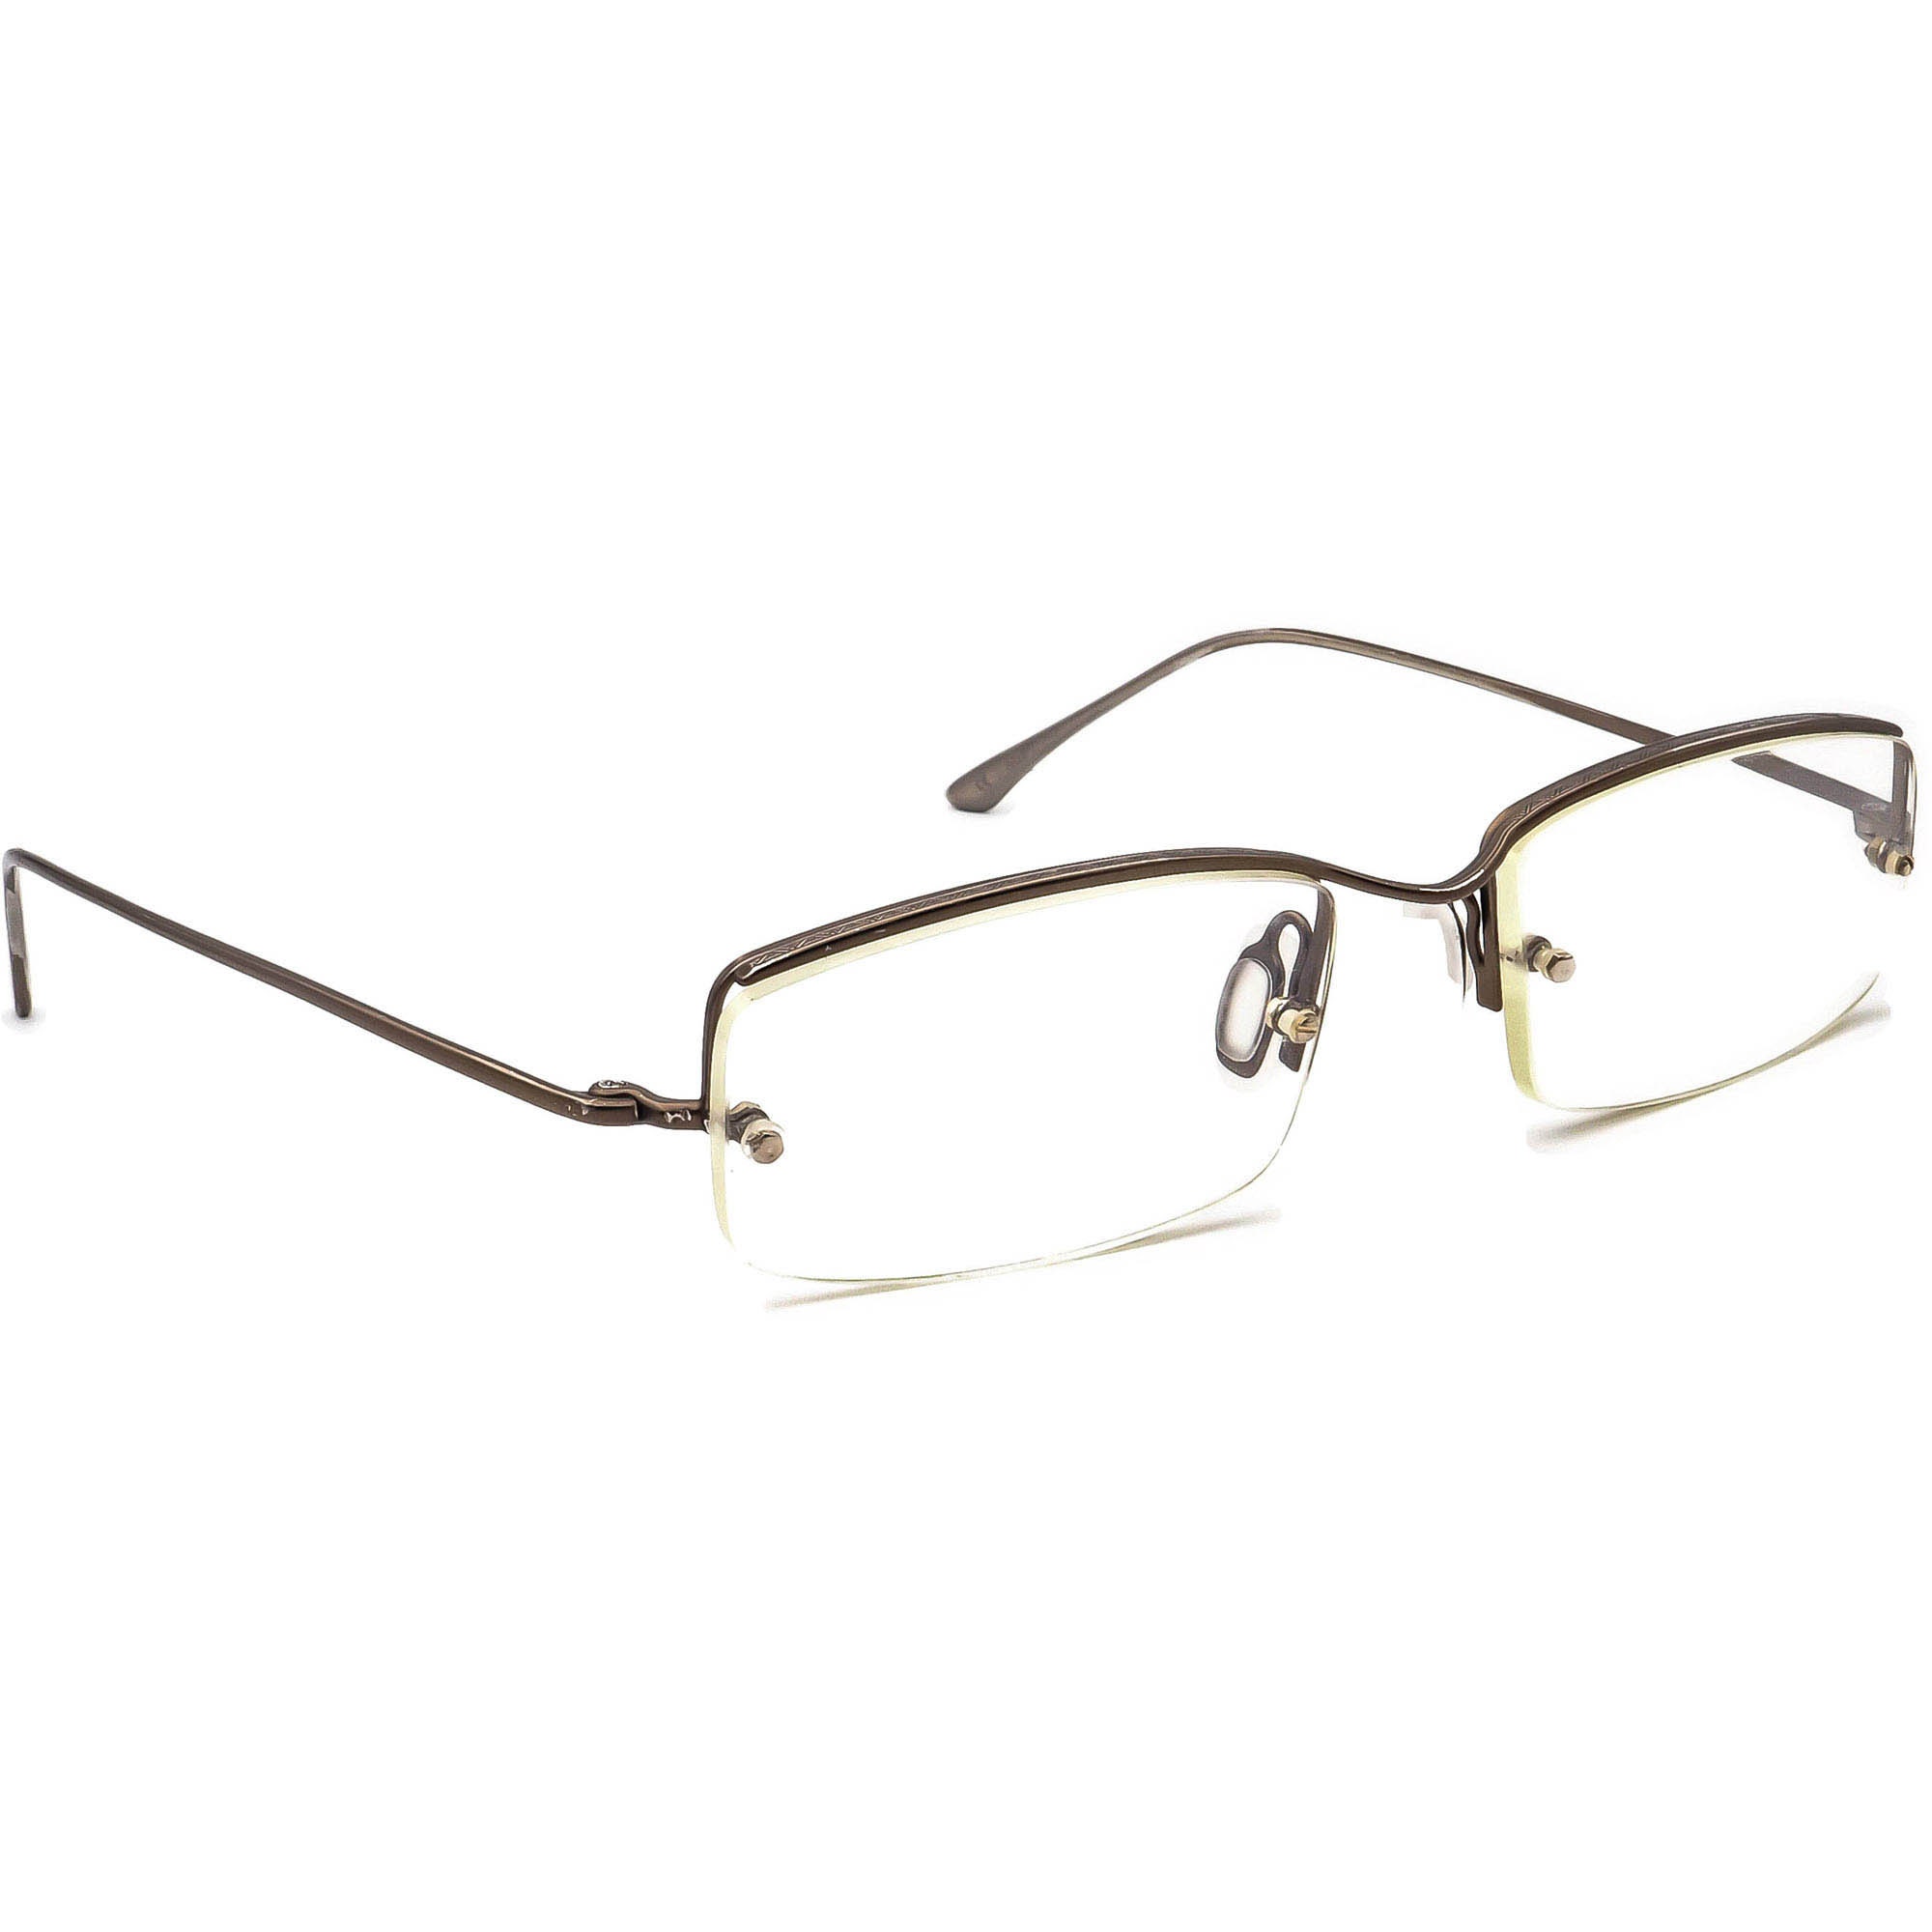 Chanel Women's Eyeglasses 3186 C.1217 Dark Merlot Oval -  Finland